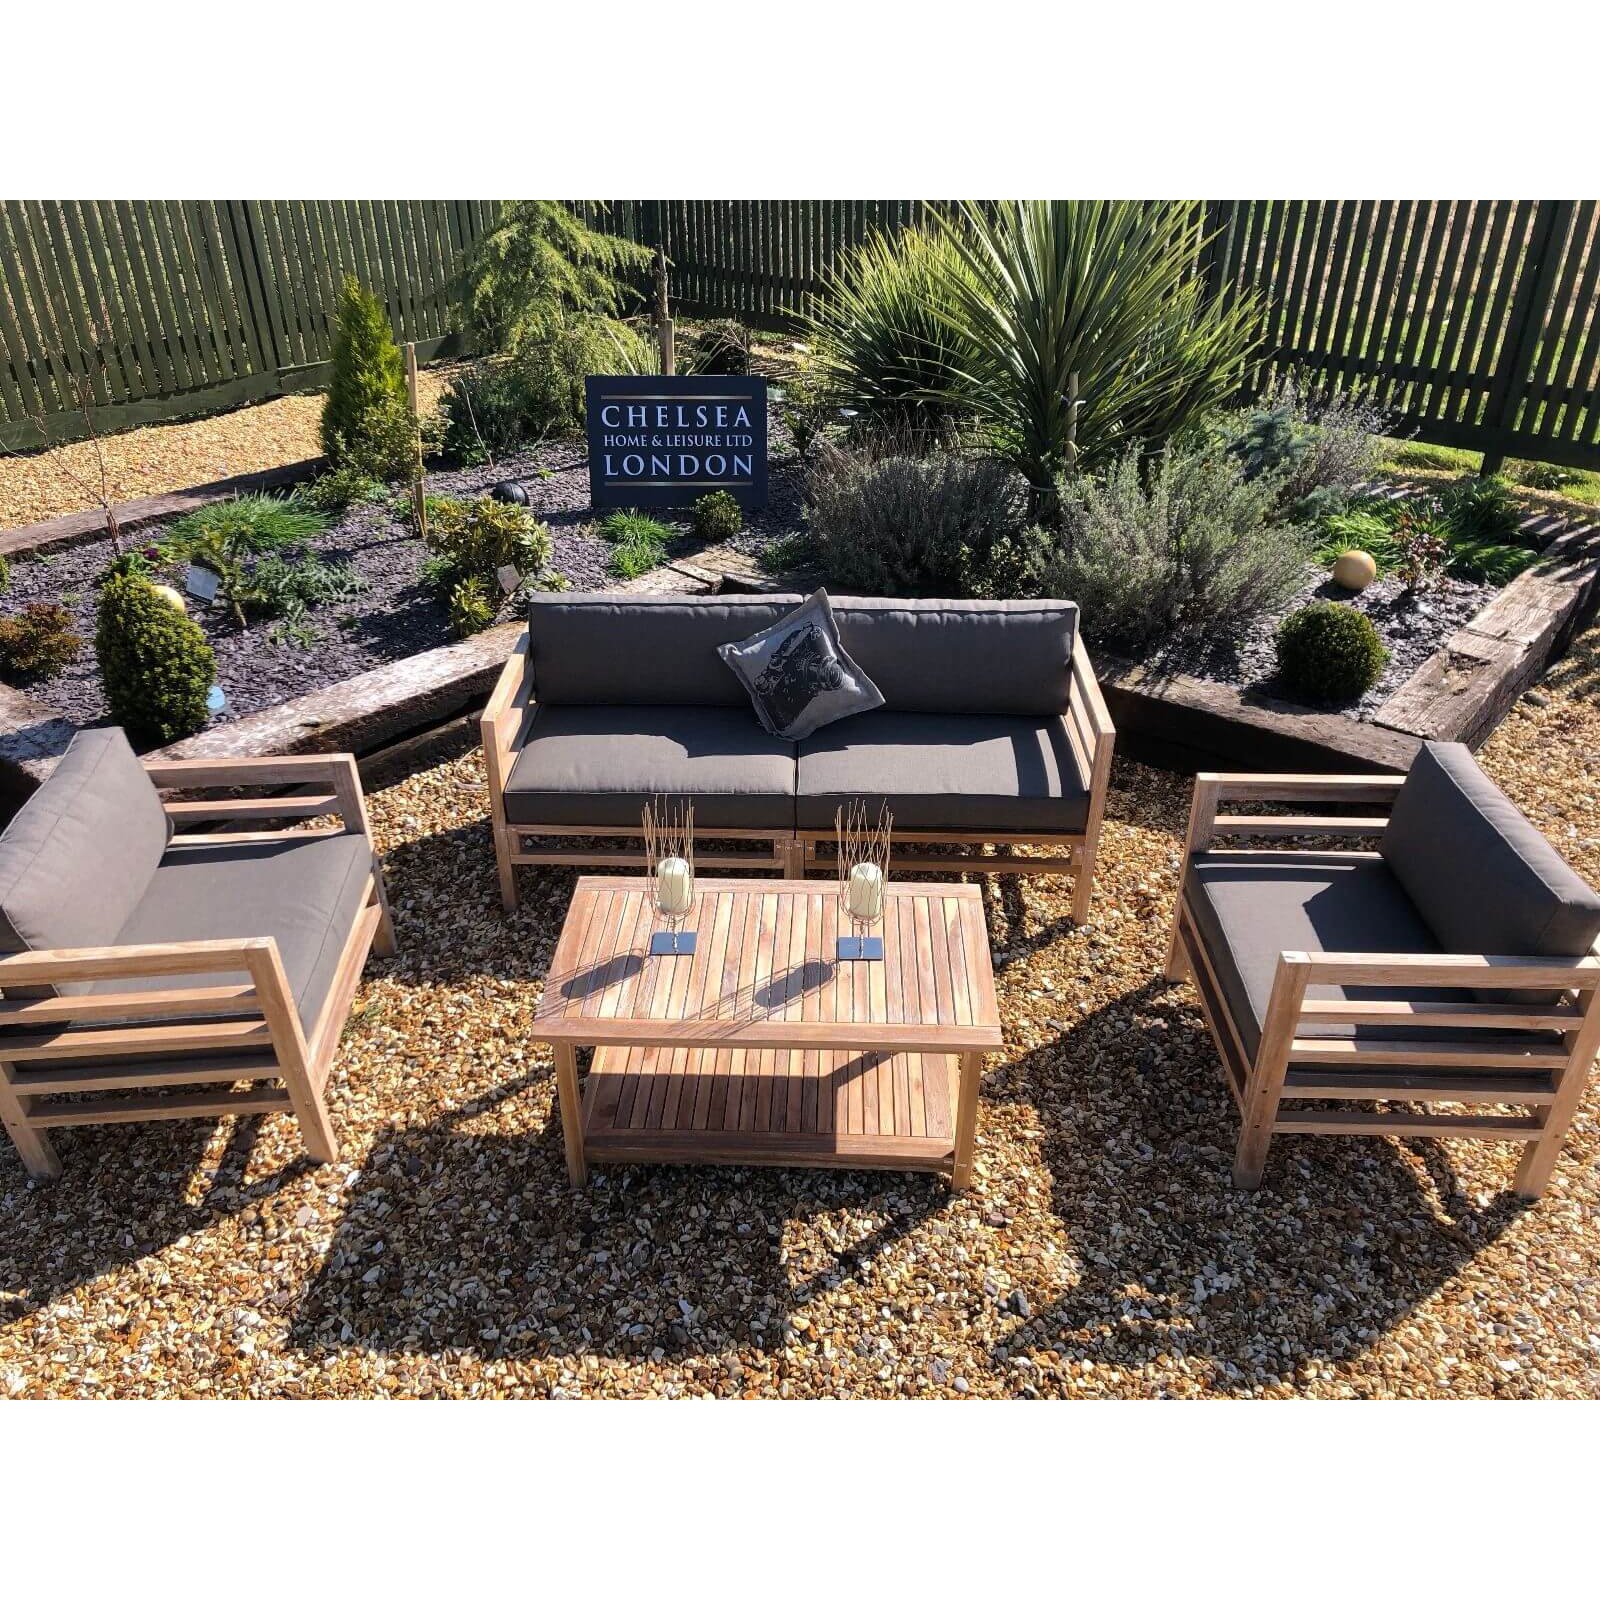 Teak Garden Sofa Set By Chelsea Home